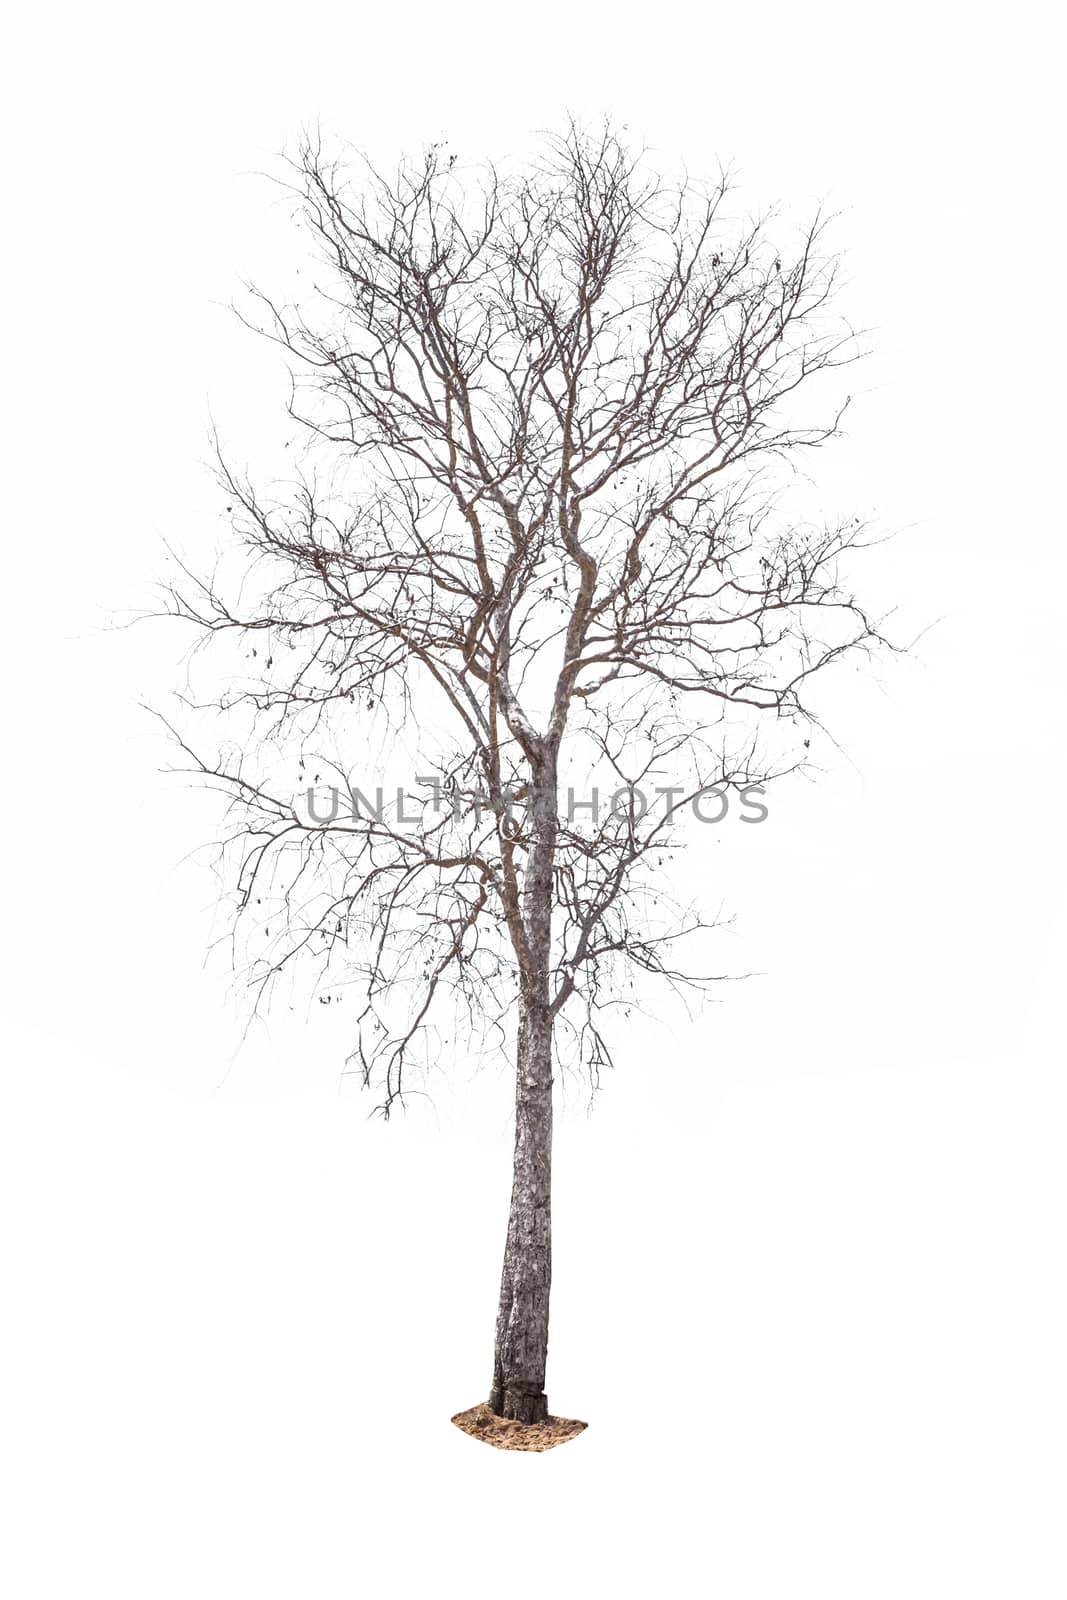 Dead tree on white background by Surasak